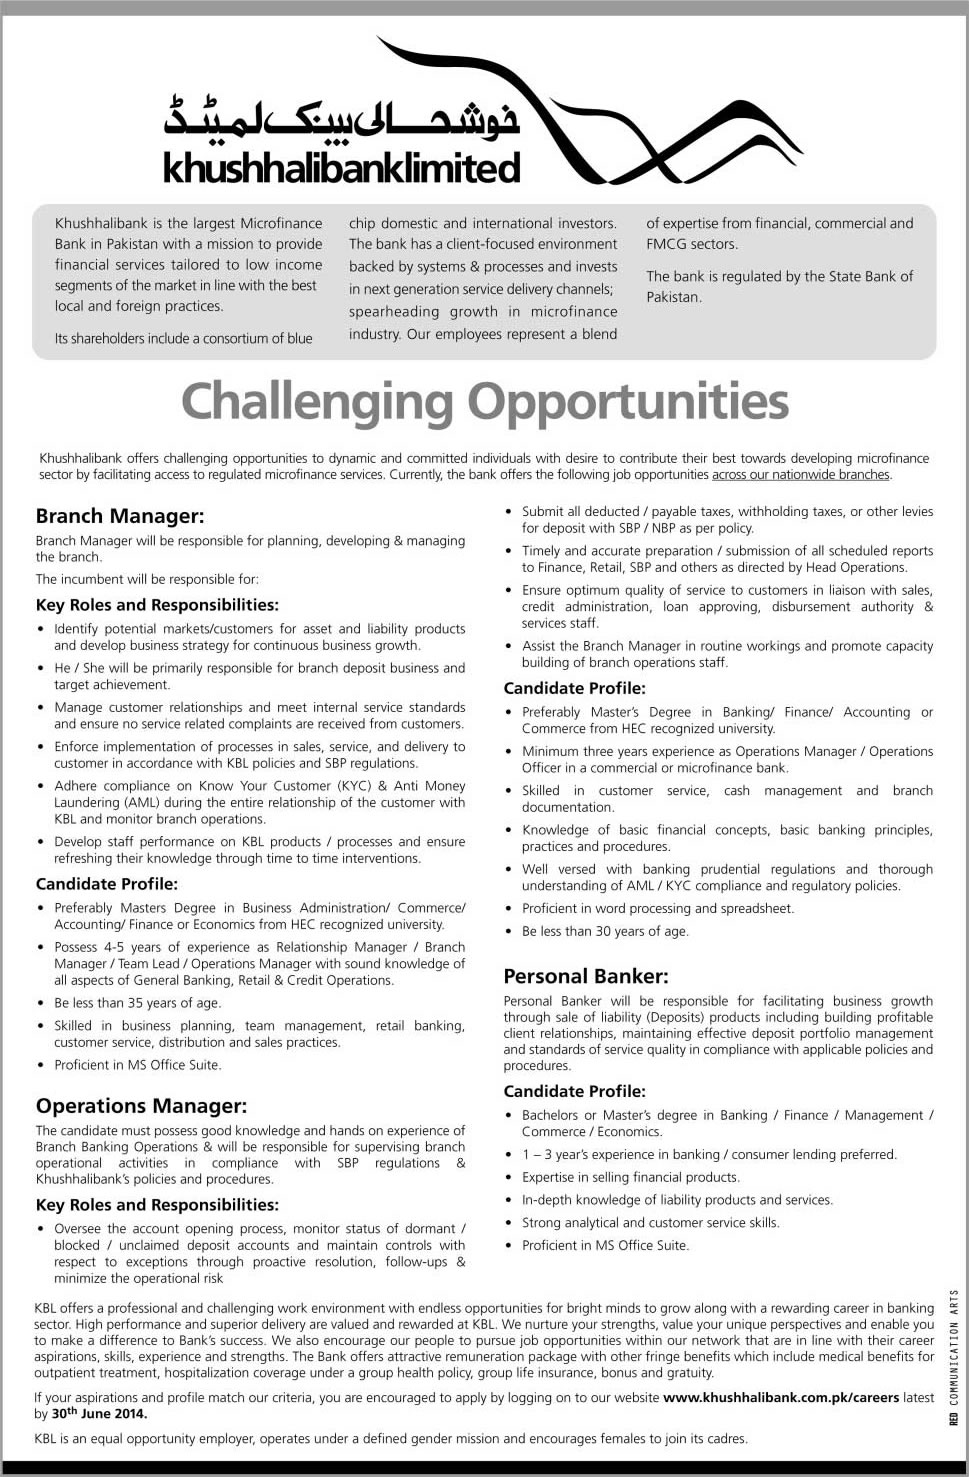 Khushhali Bank Limited Jobs 2014 June Latest Advertisement